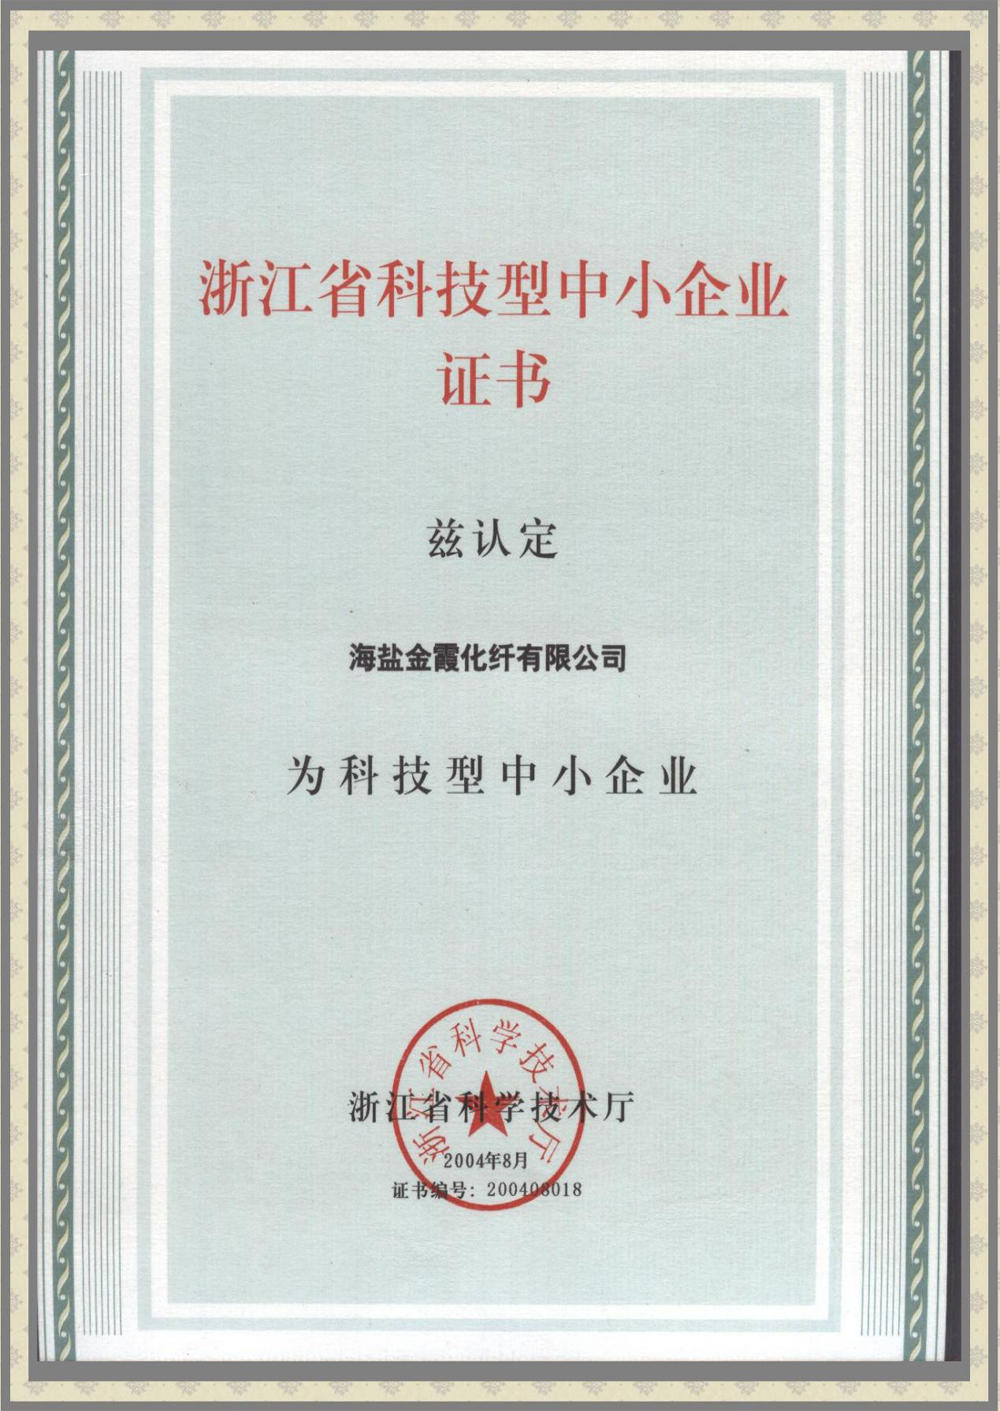 Technology Enterprise Certificate